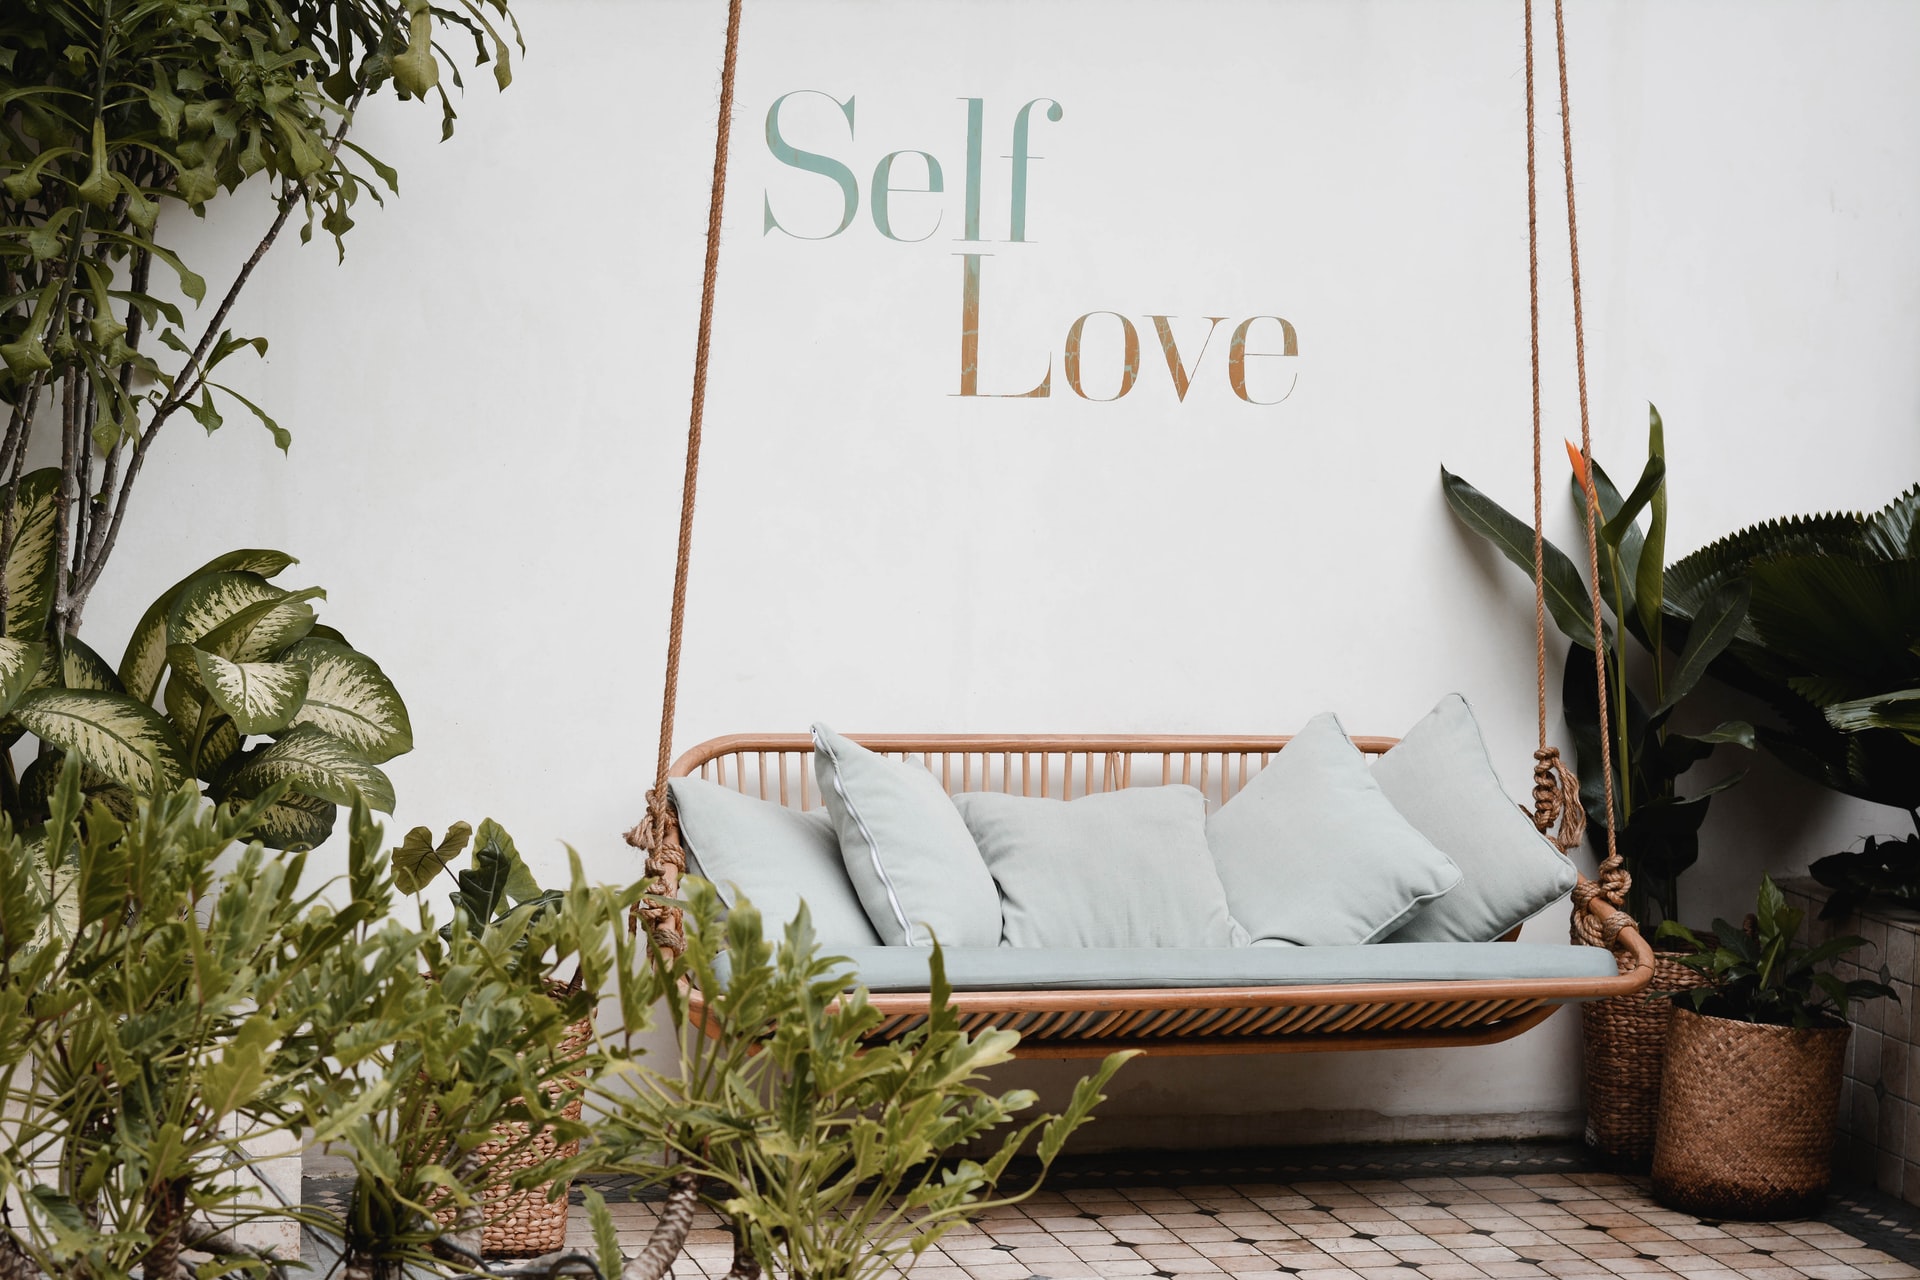 Arti Self Love dan 27 Cara Menerapkannya dalam Kehidupan Kamu | Yuk, Cintai Diri Sendiri